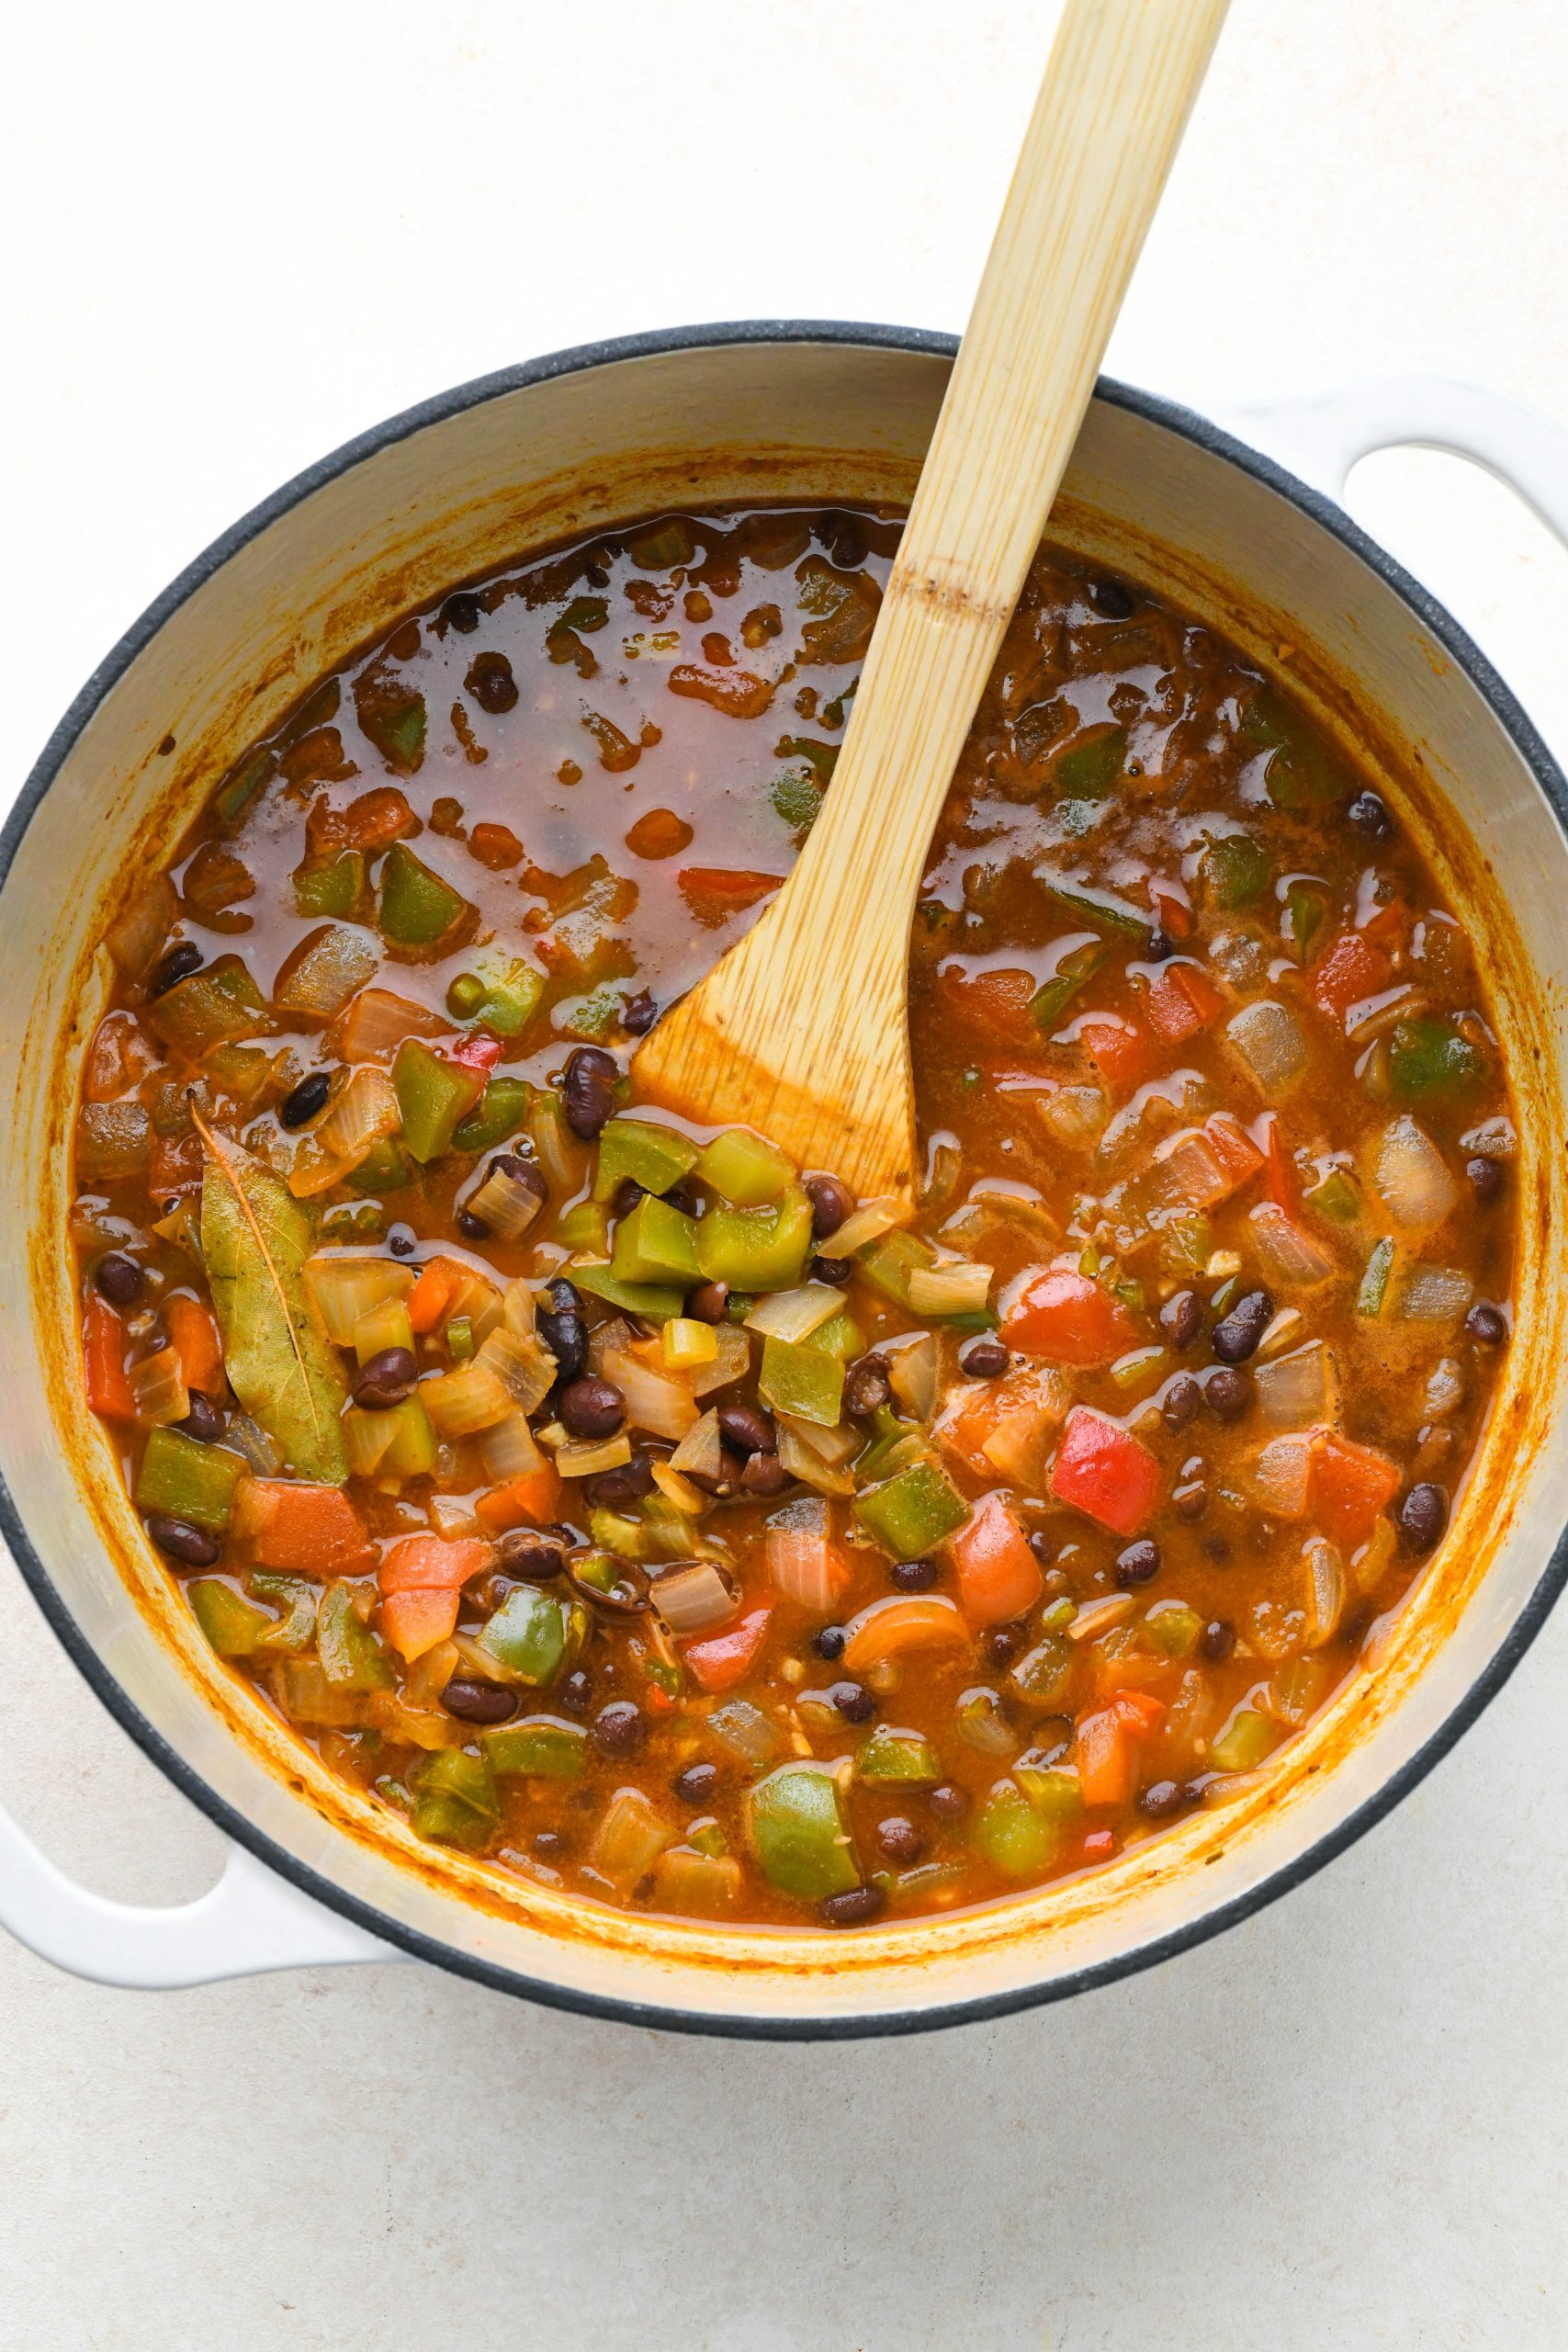 How to make vegan black bean soup: Soup simmered together, before blending.